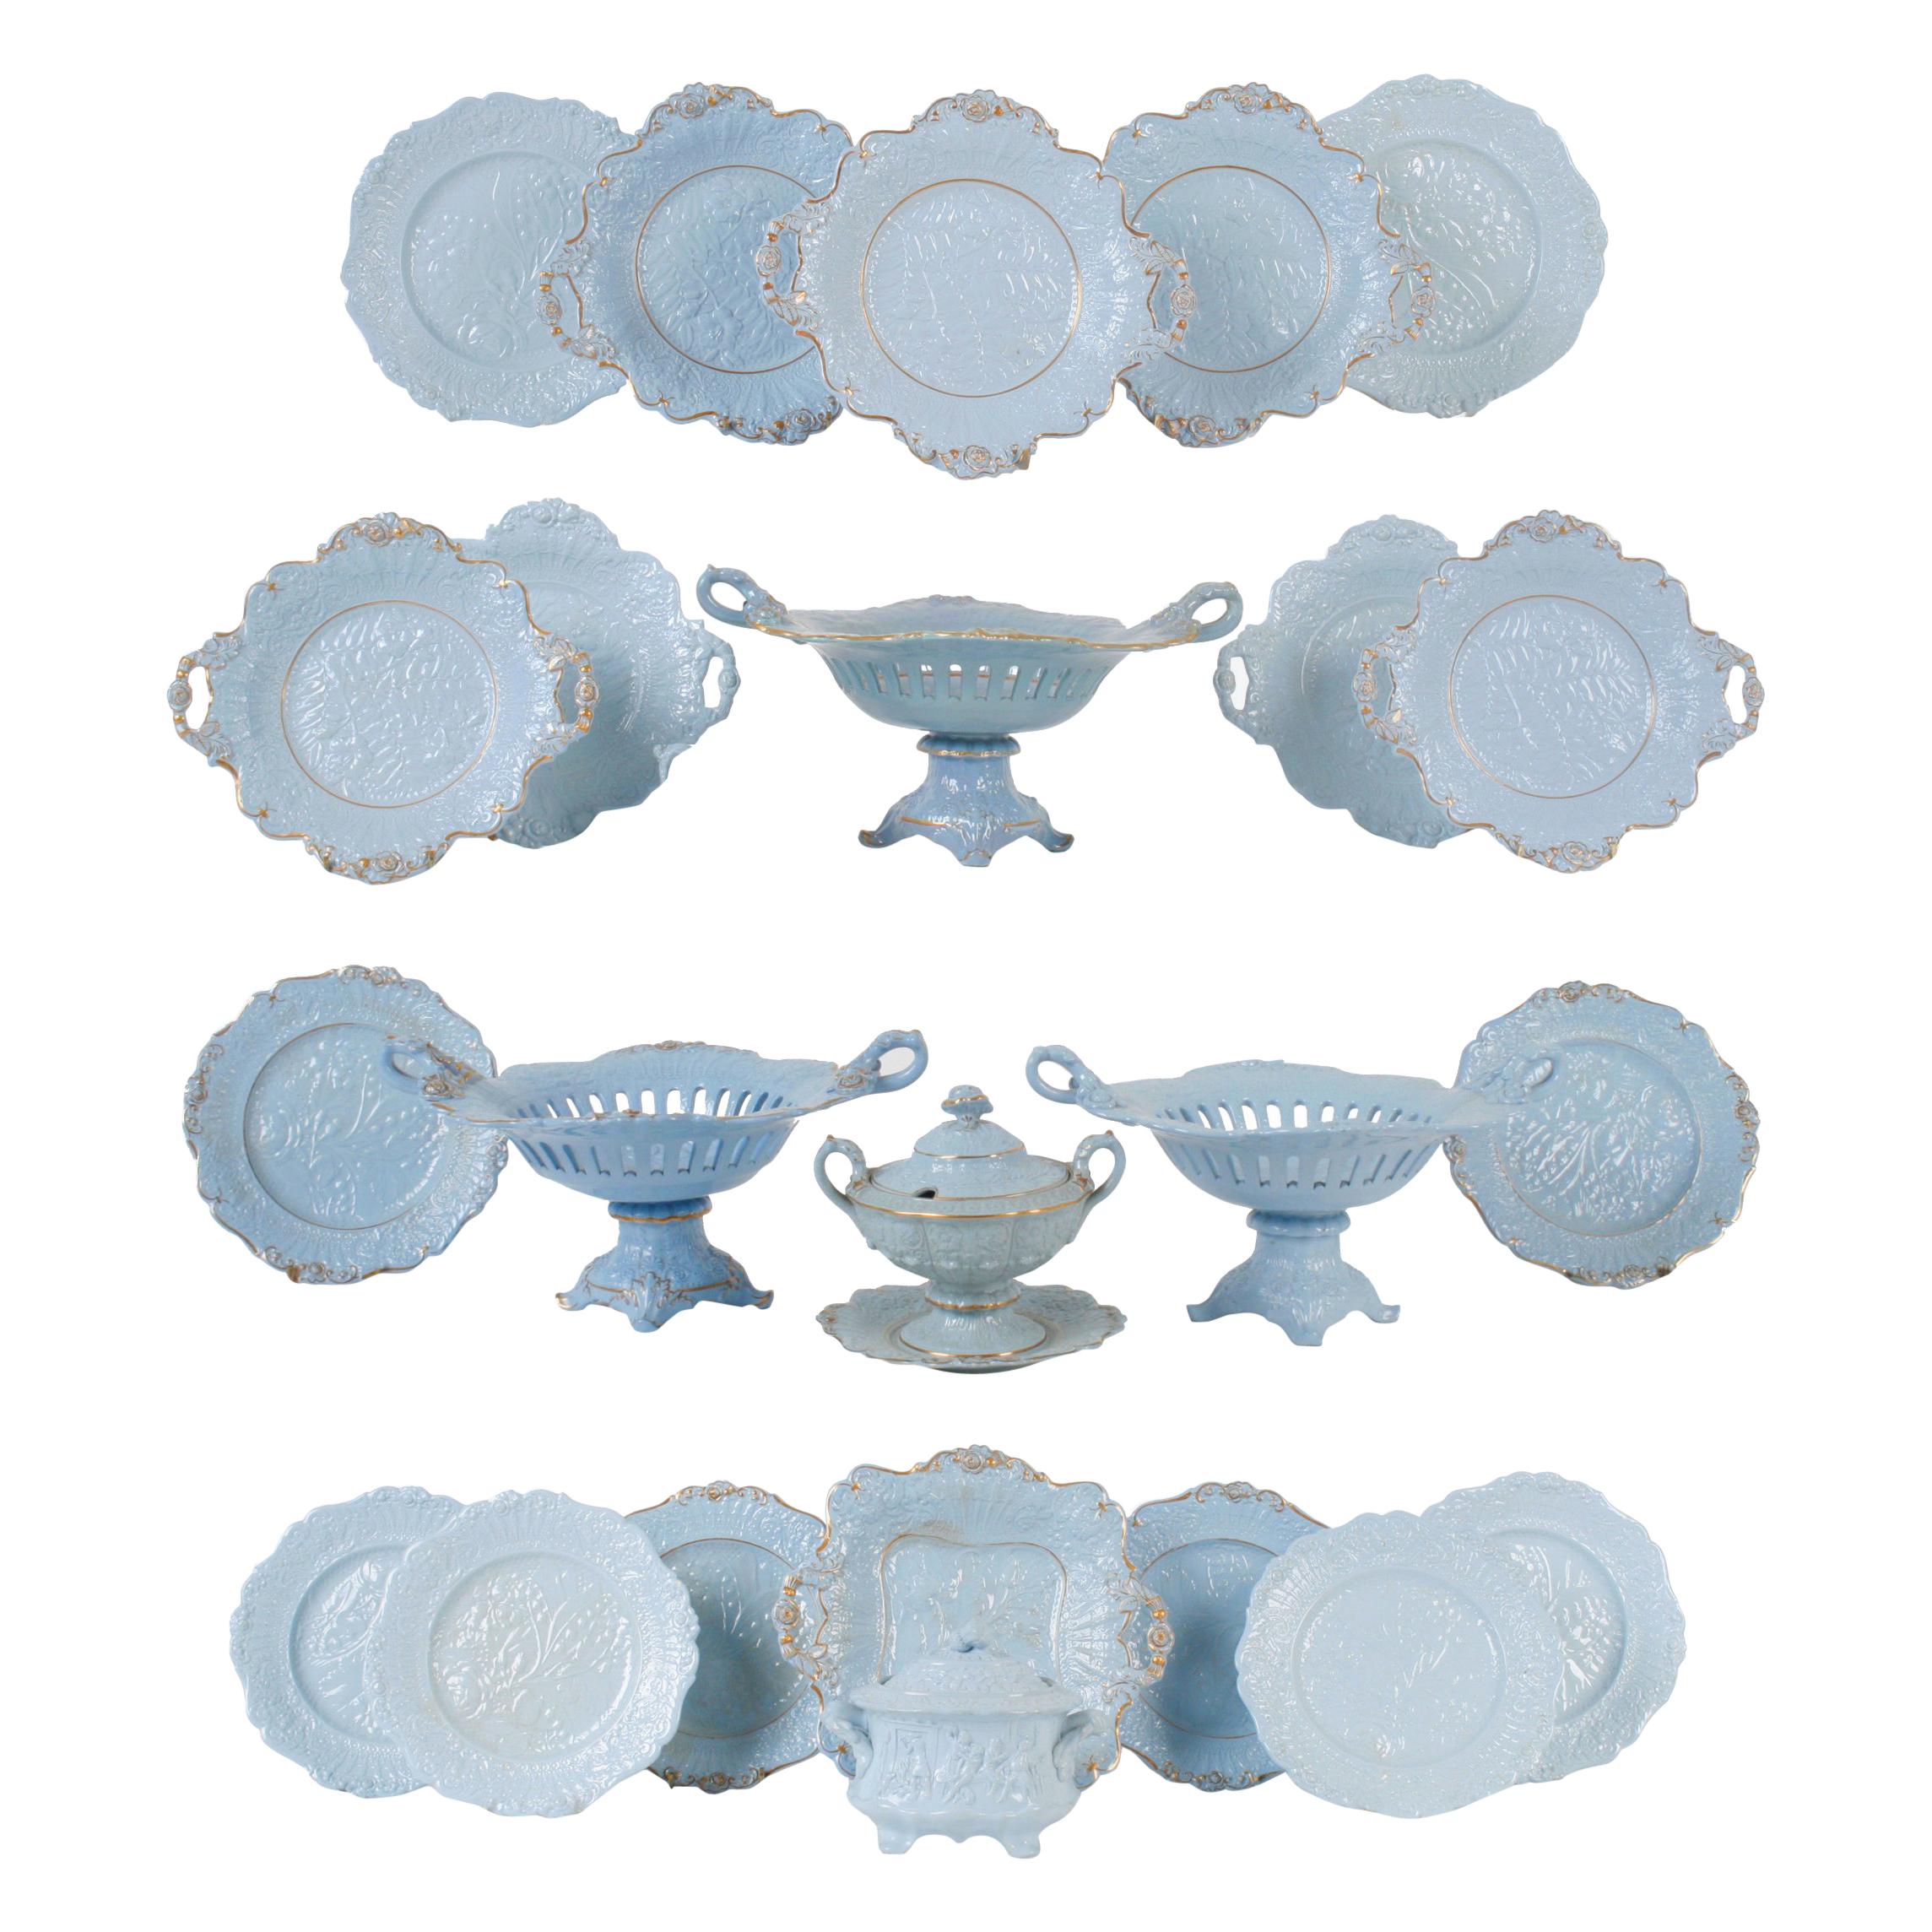 William Ridgway & Co. Blue Relief Molded Staffordshire Dinnerware, circa 1830